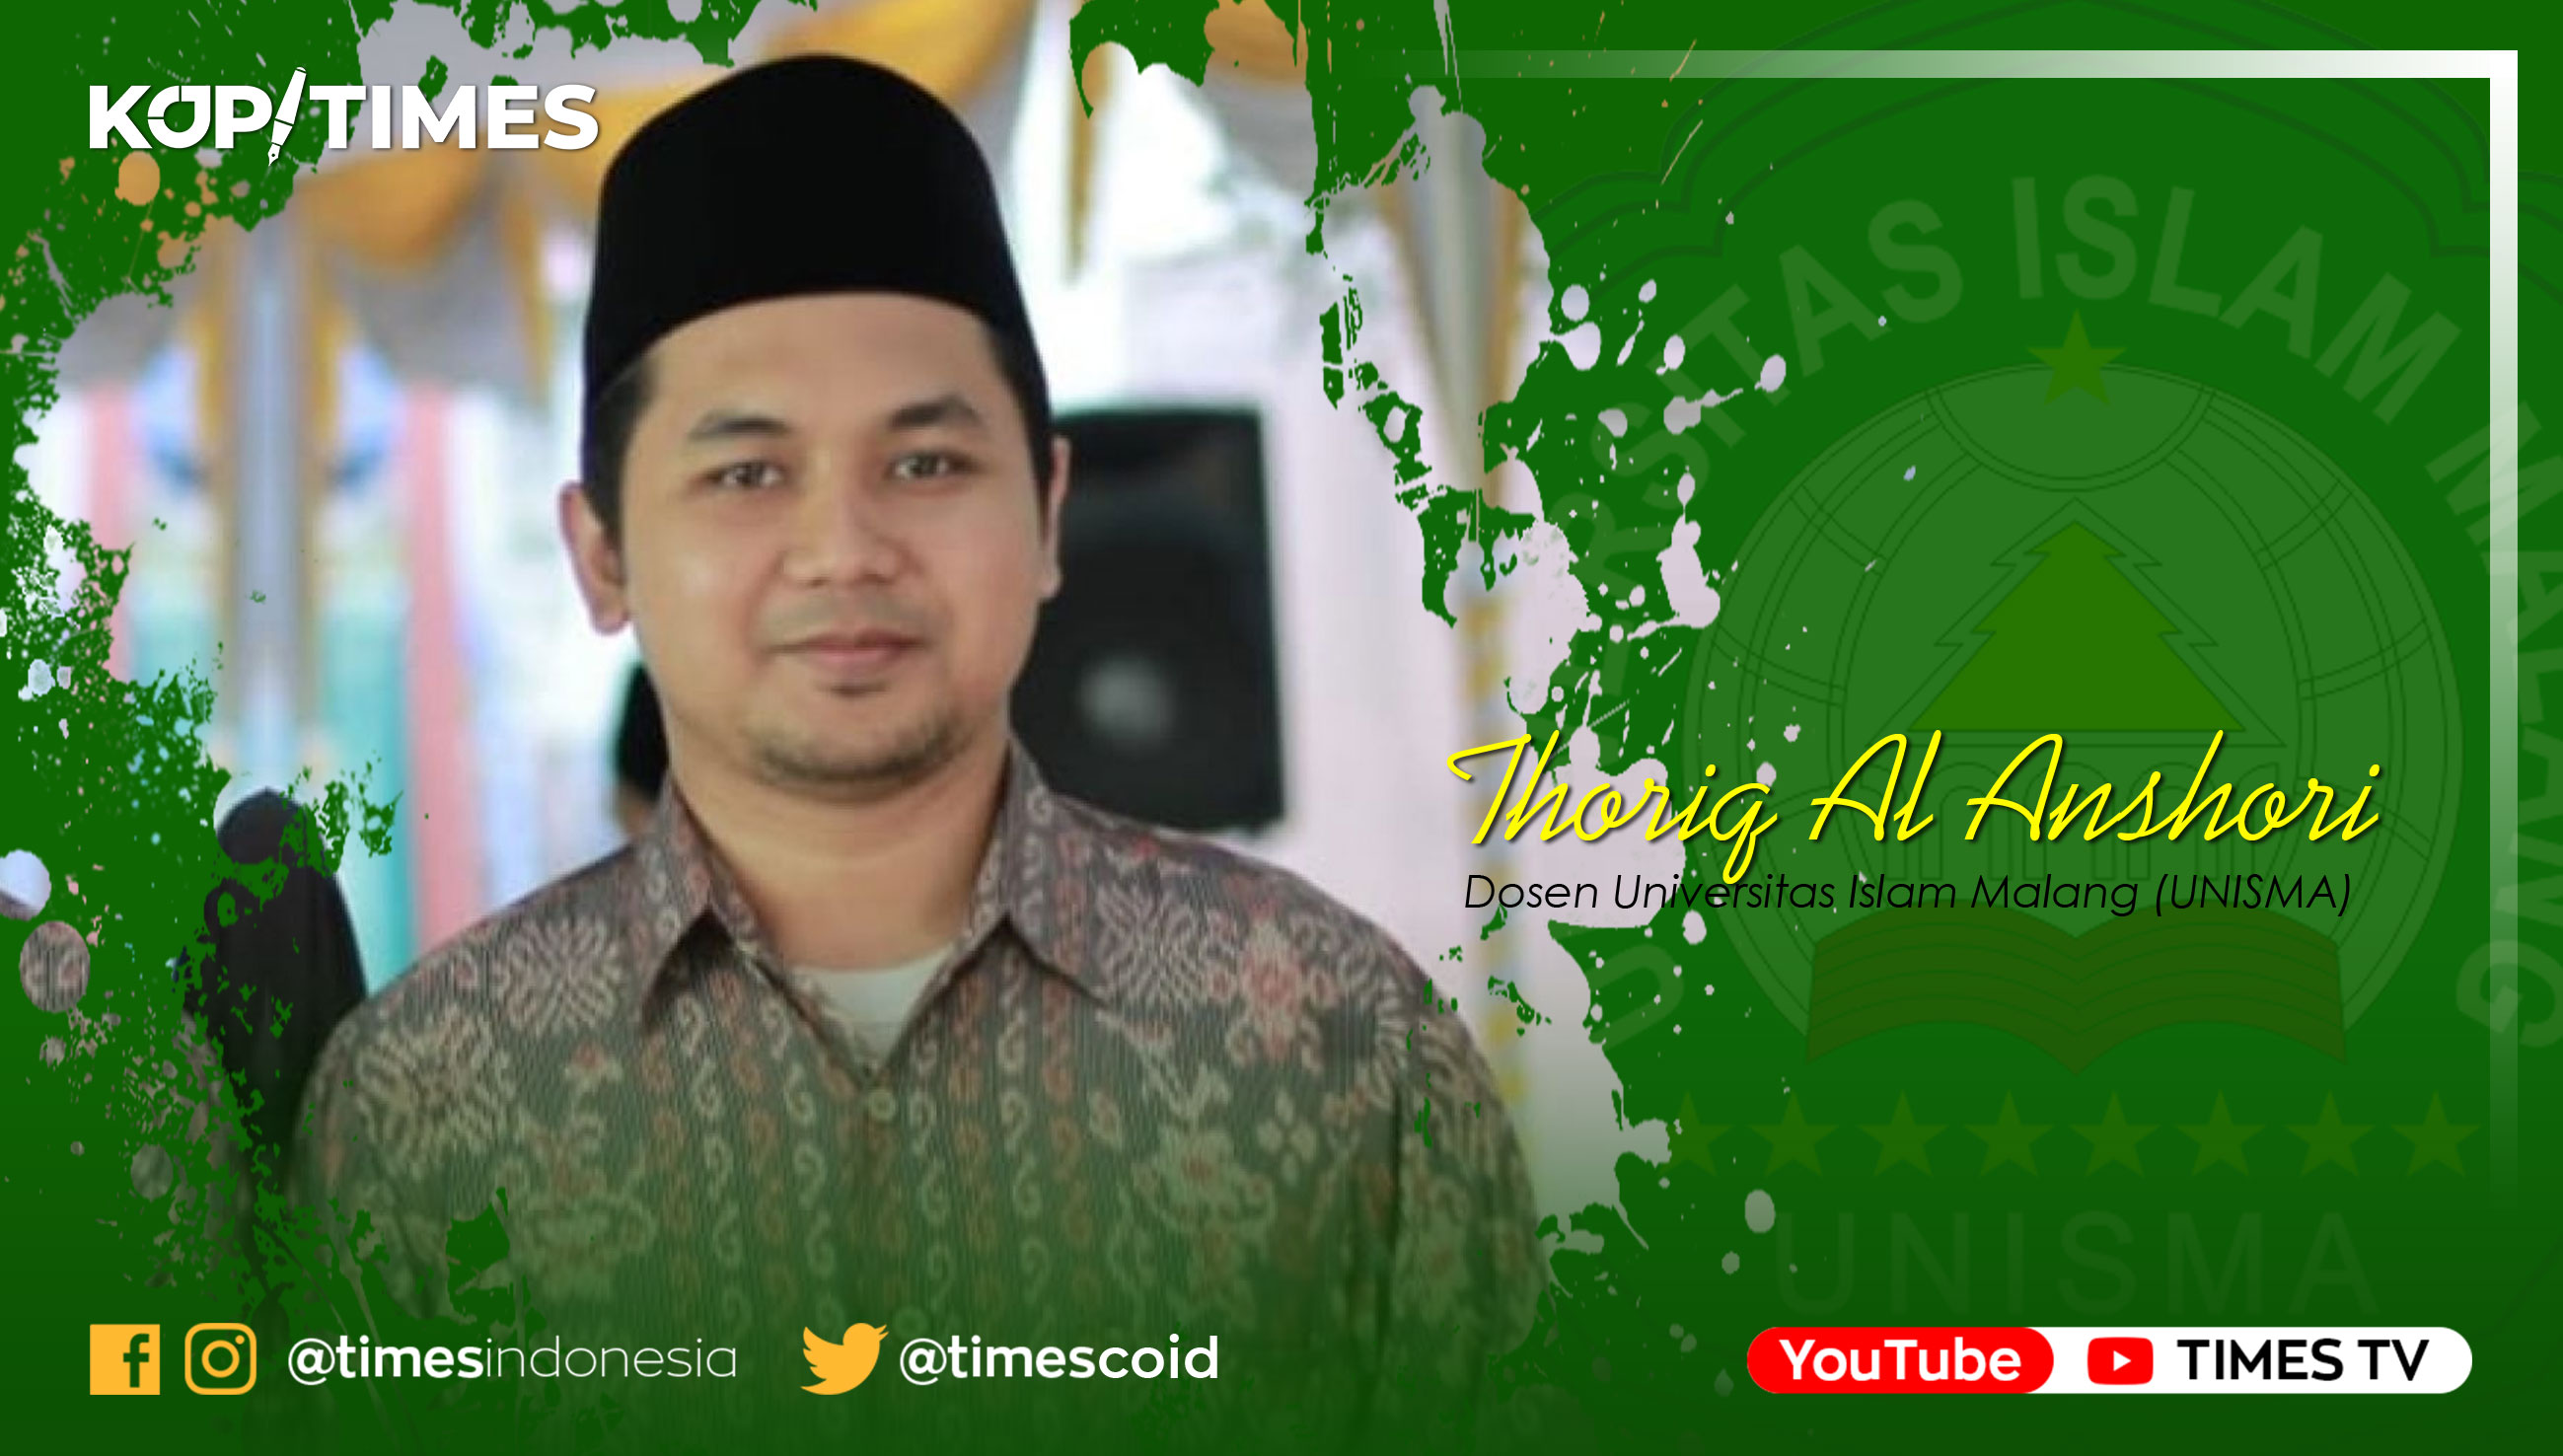 Thoriq Al Anshori, M.Pd, Dosen Fakultas Agama Islam Universitas Islam Malang (UNISMA).